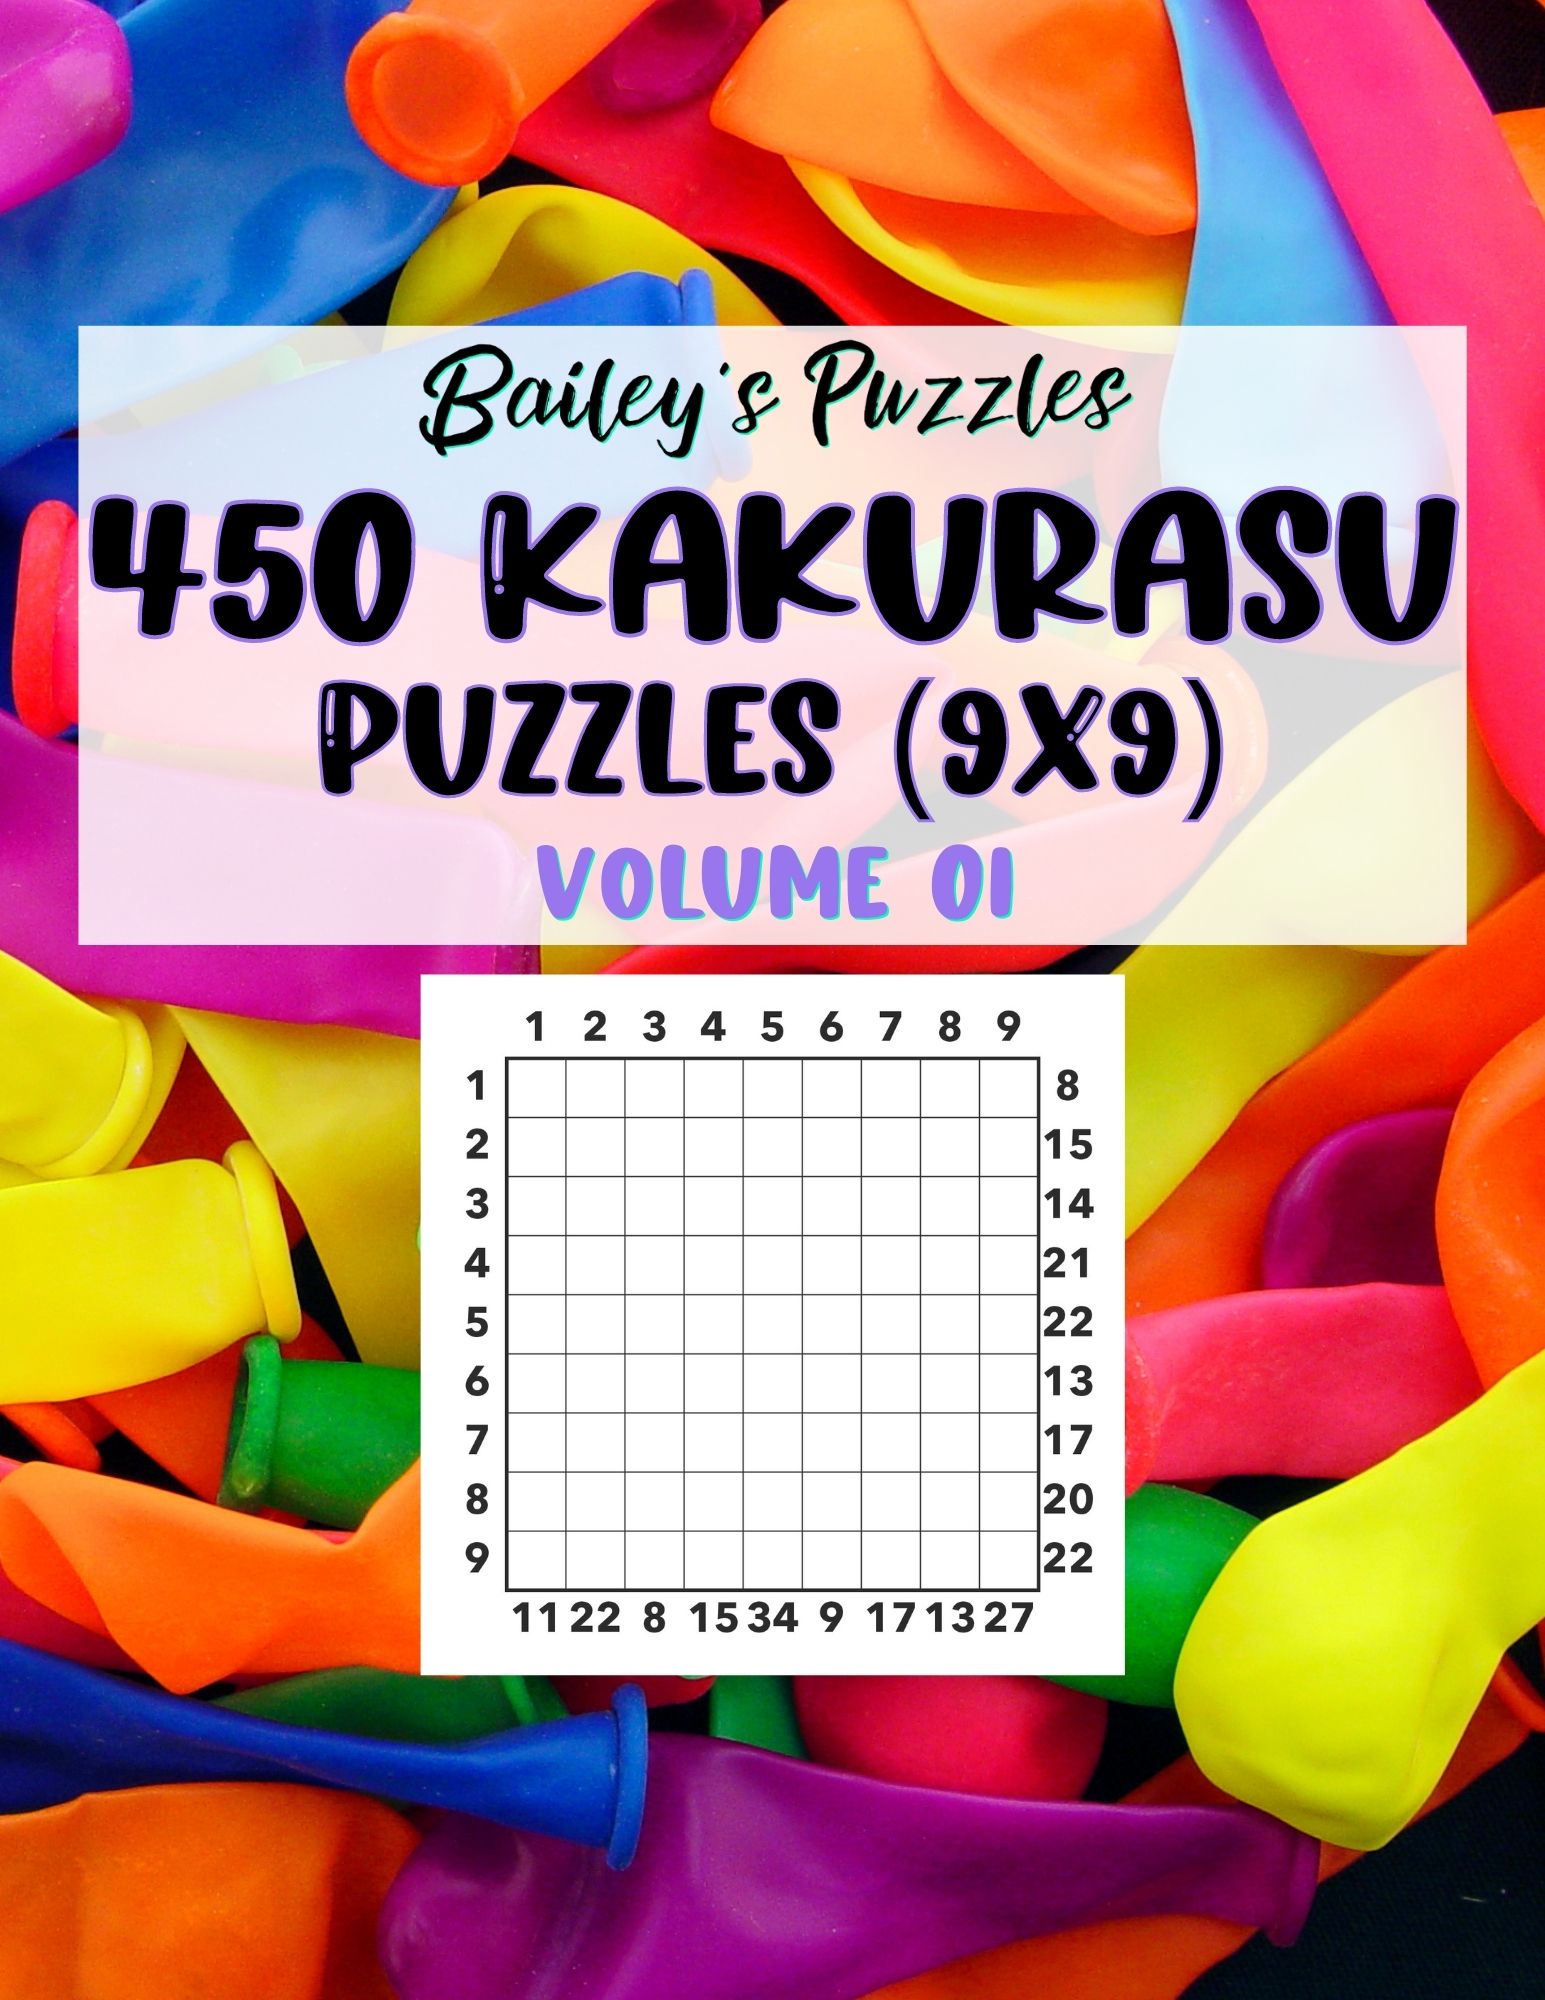 Buy Now: 450 Kakurasu Puzzles 9x9